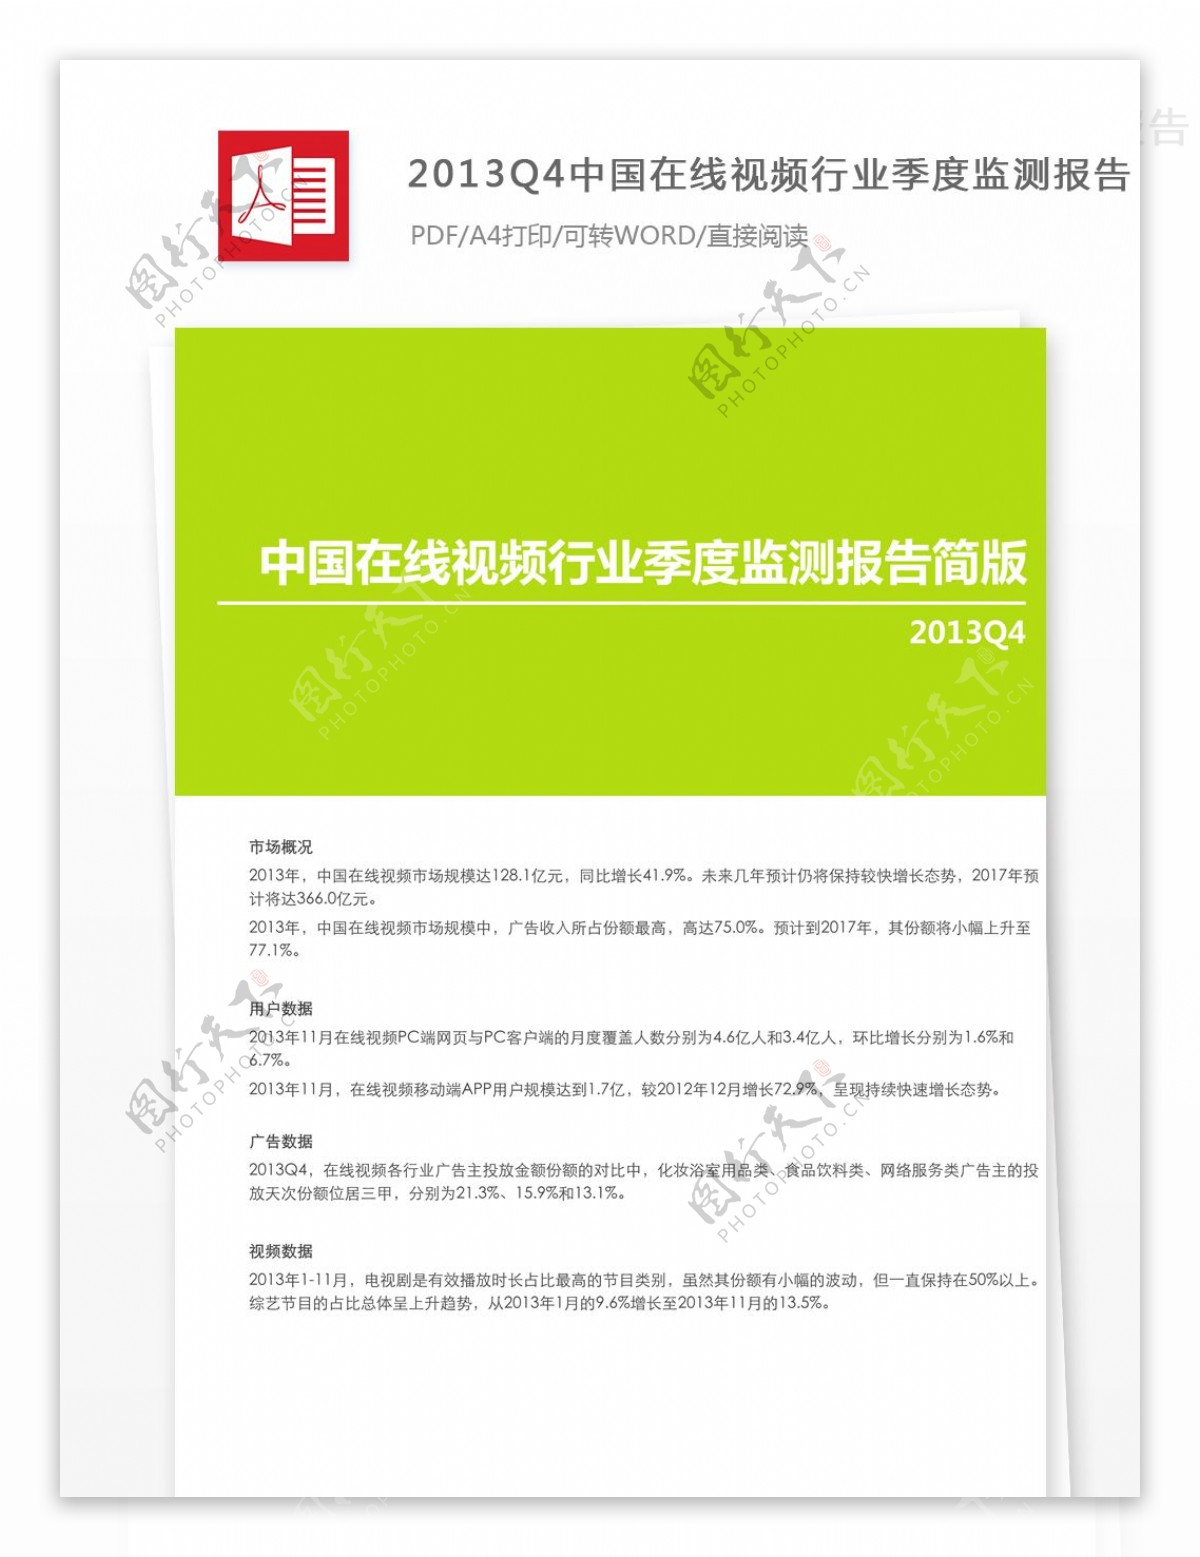 2013Q4中国在线视频行业季度监测报告的结束语